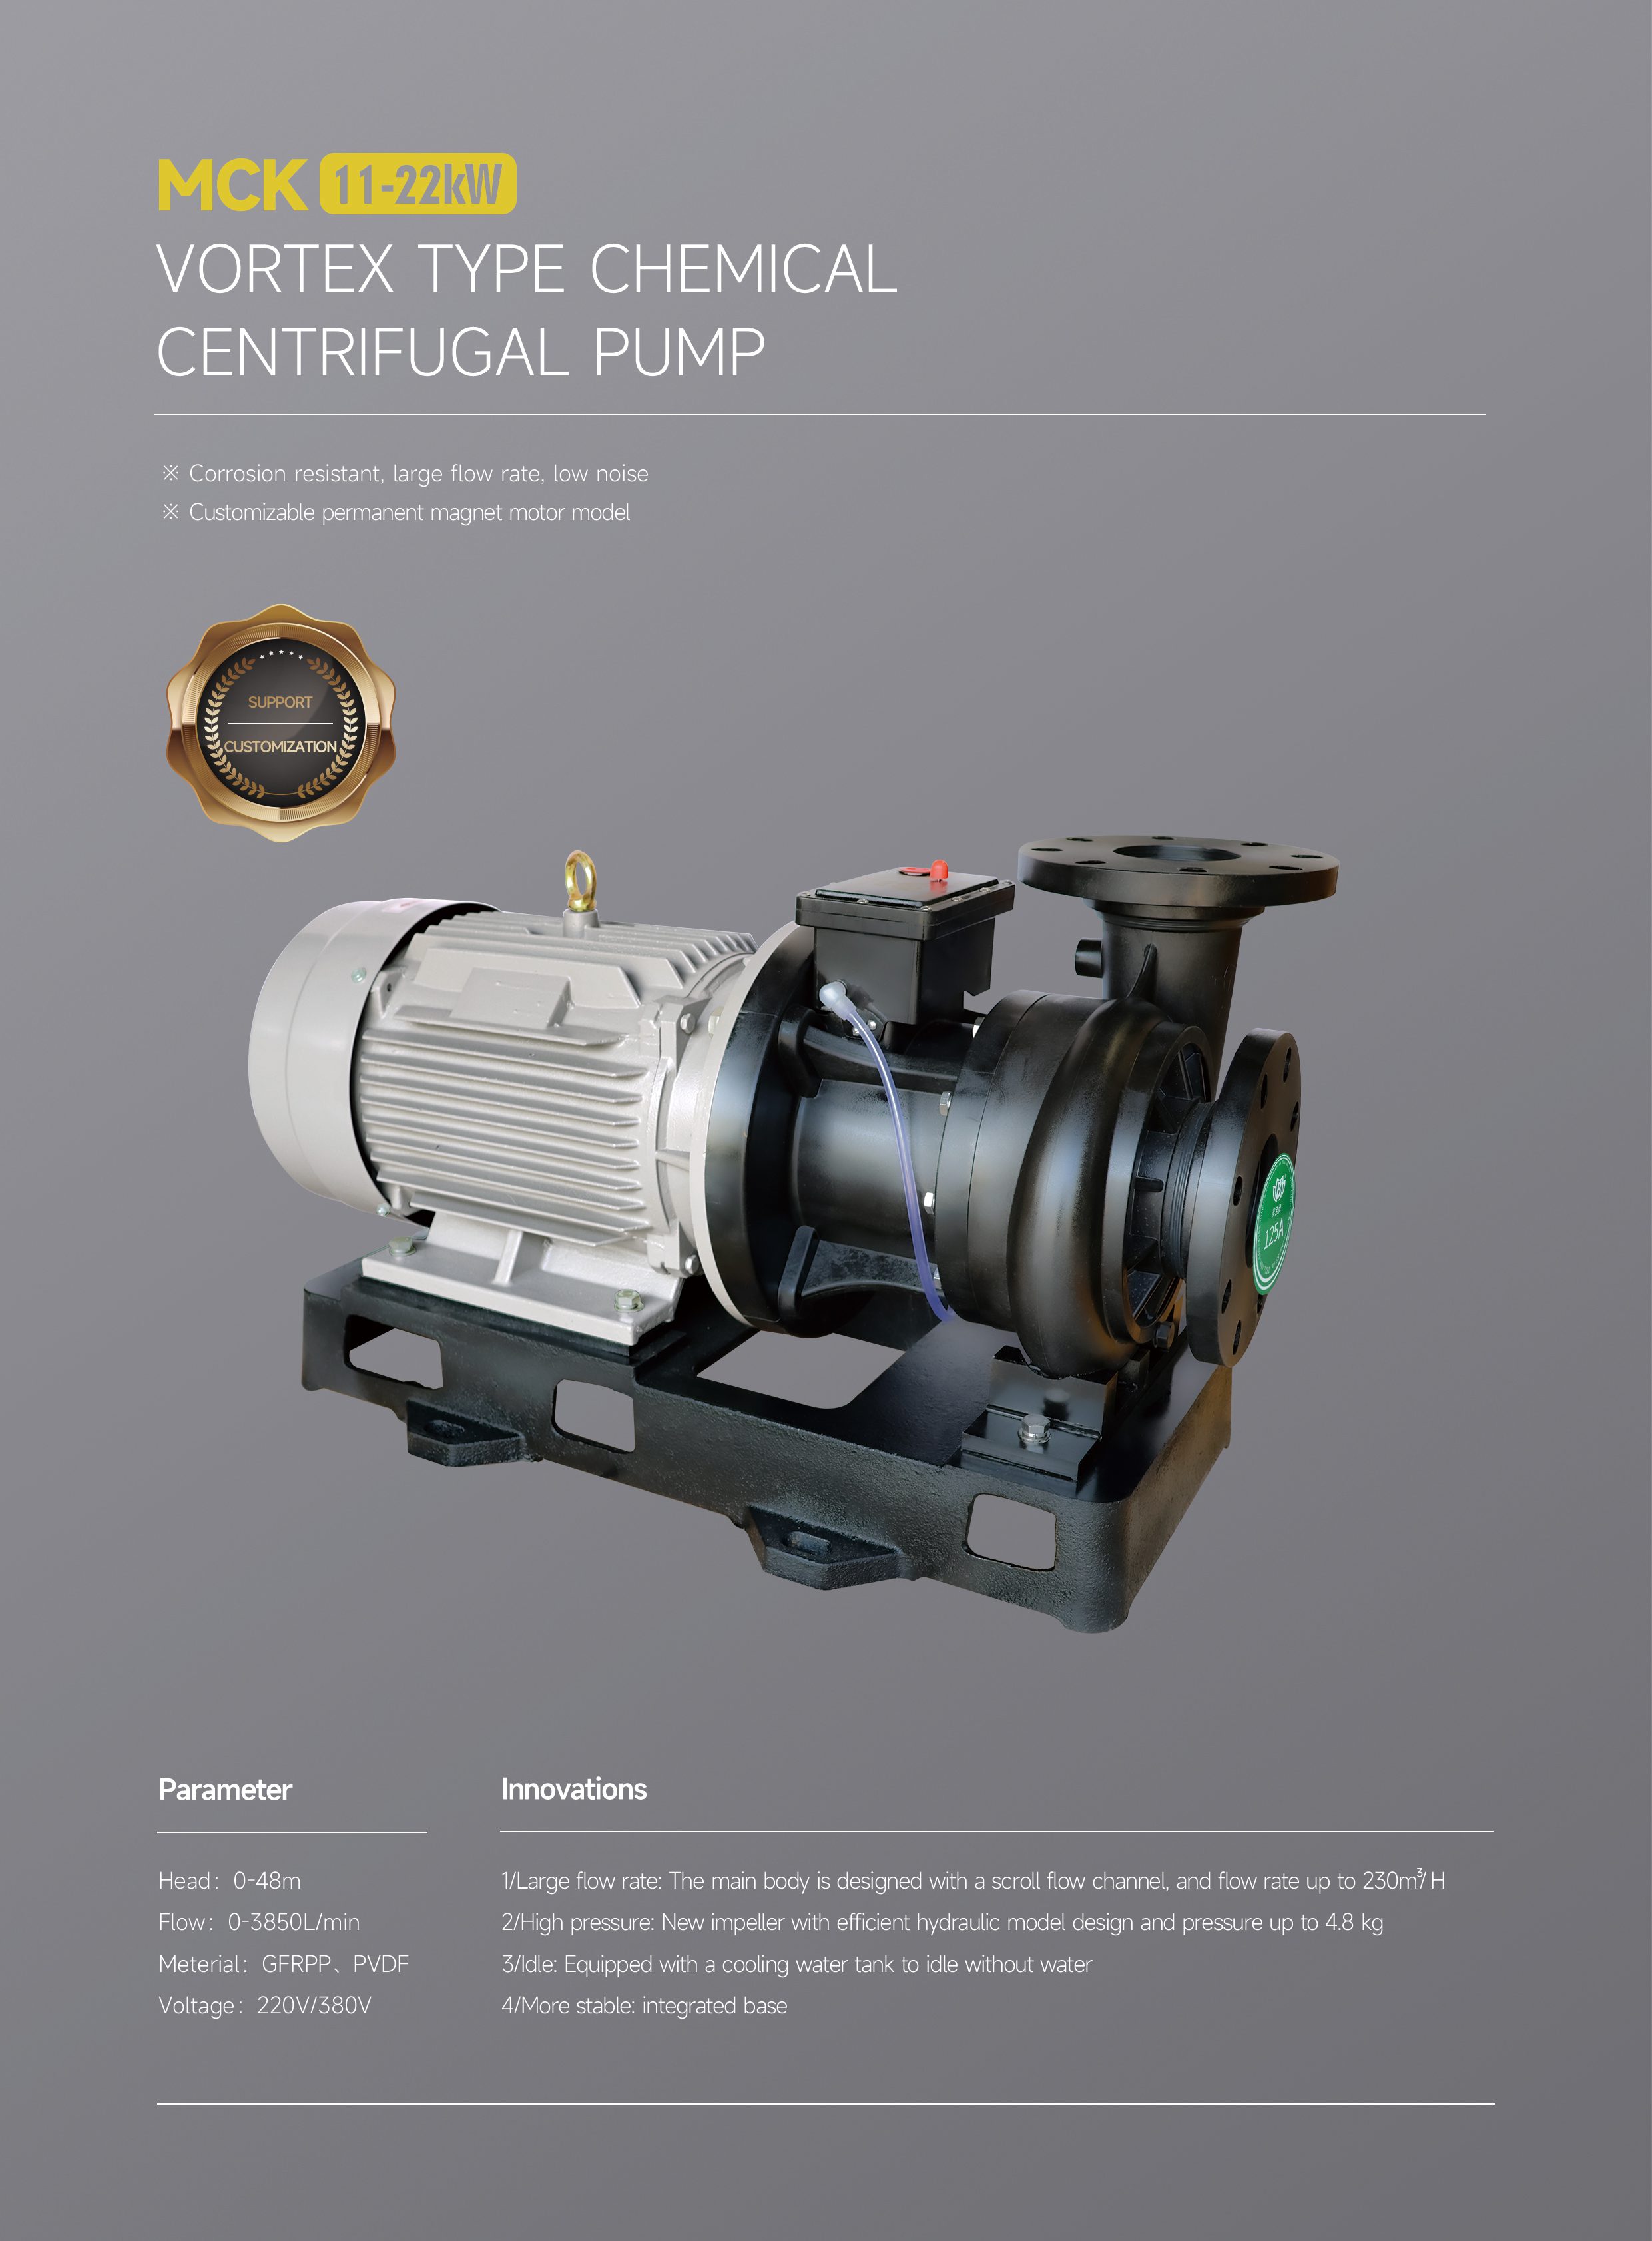 vortex type chemical centrifugal pump(旋涡式化工离心泵).jpg